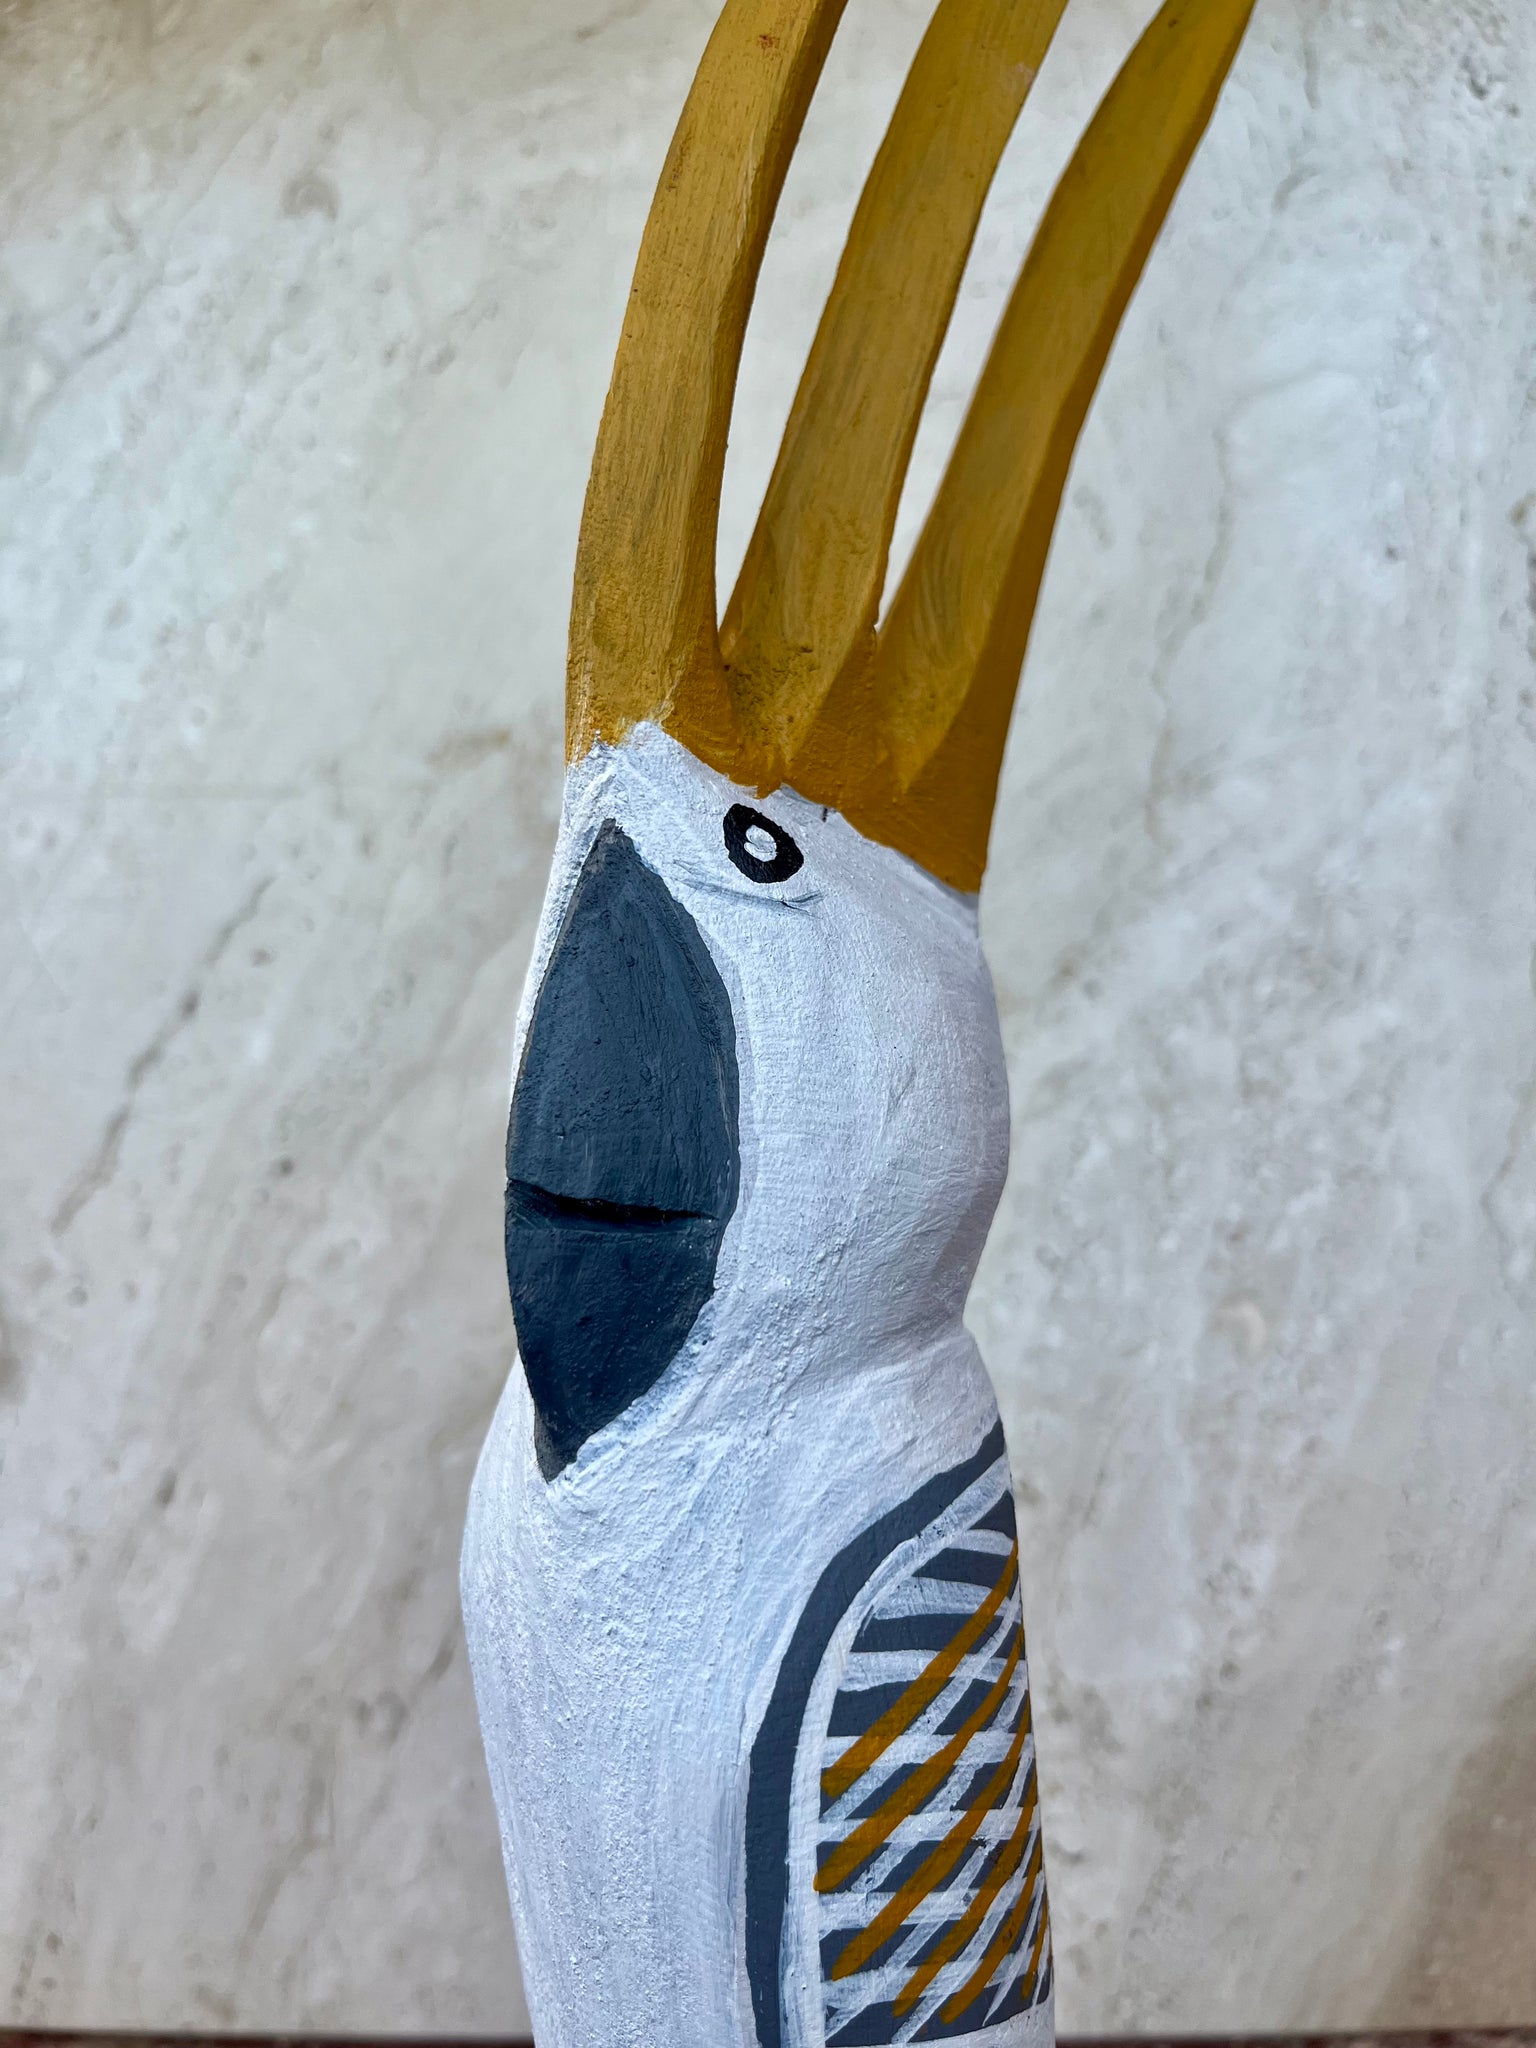 Ngarradj (Sulphur Crested Cockatoo)